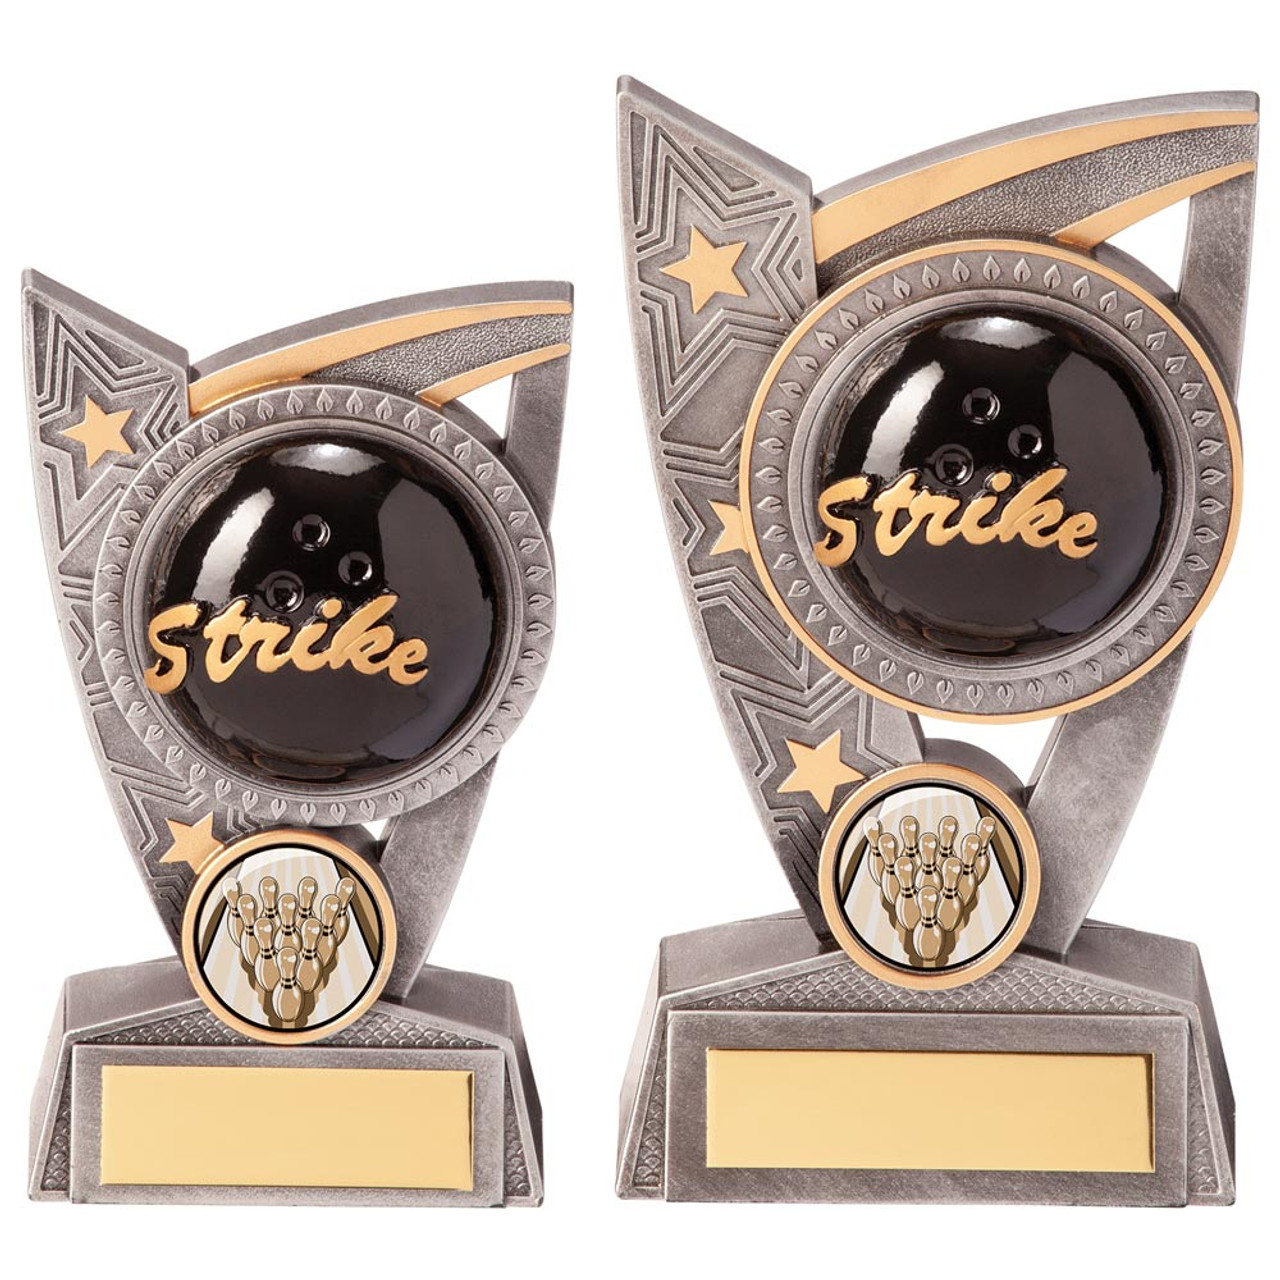 Ten Pin Bowling Club Silver & Gold Triumph Strike Award in 2 Sizes